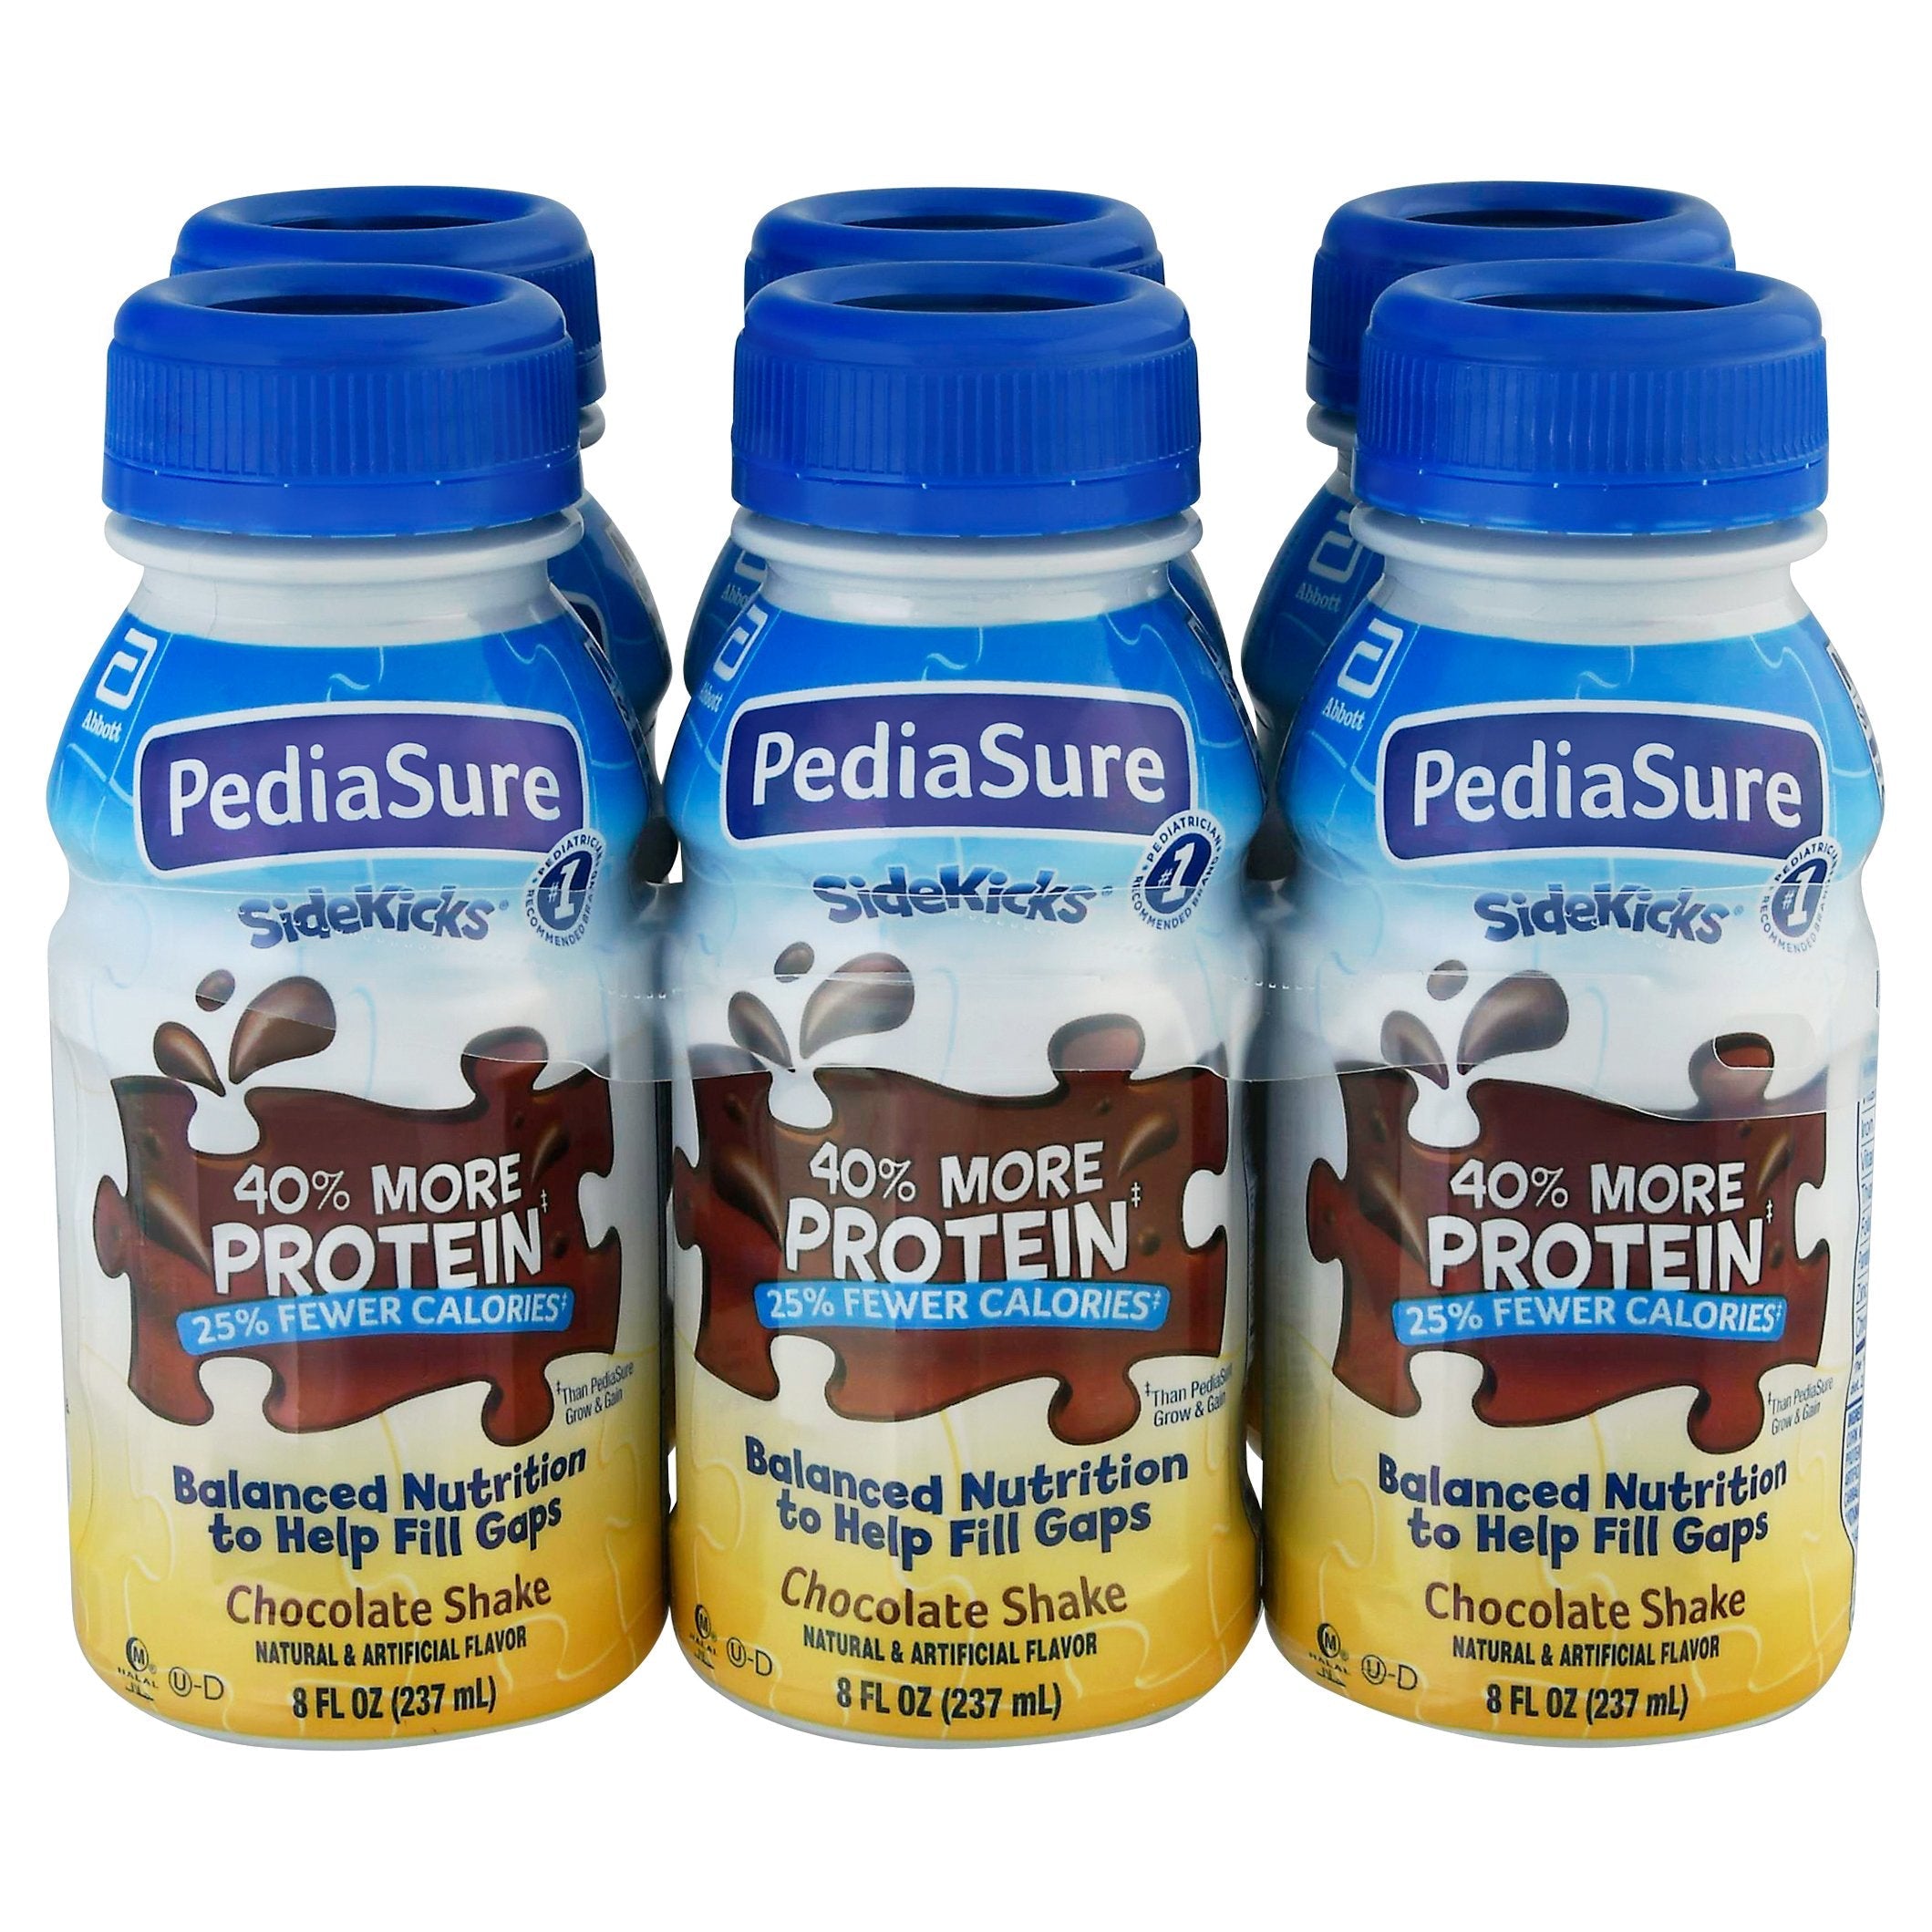  PediaSure Sidekicks Nutrition Drink, Chocolate, 8 fl